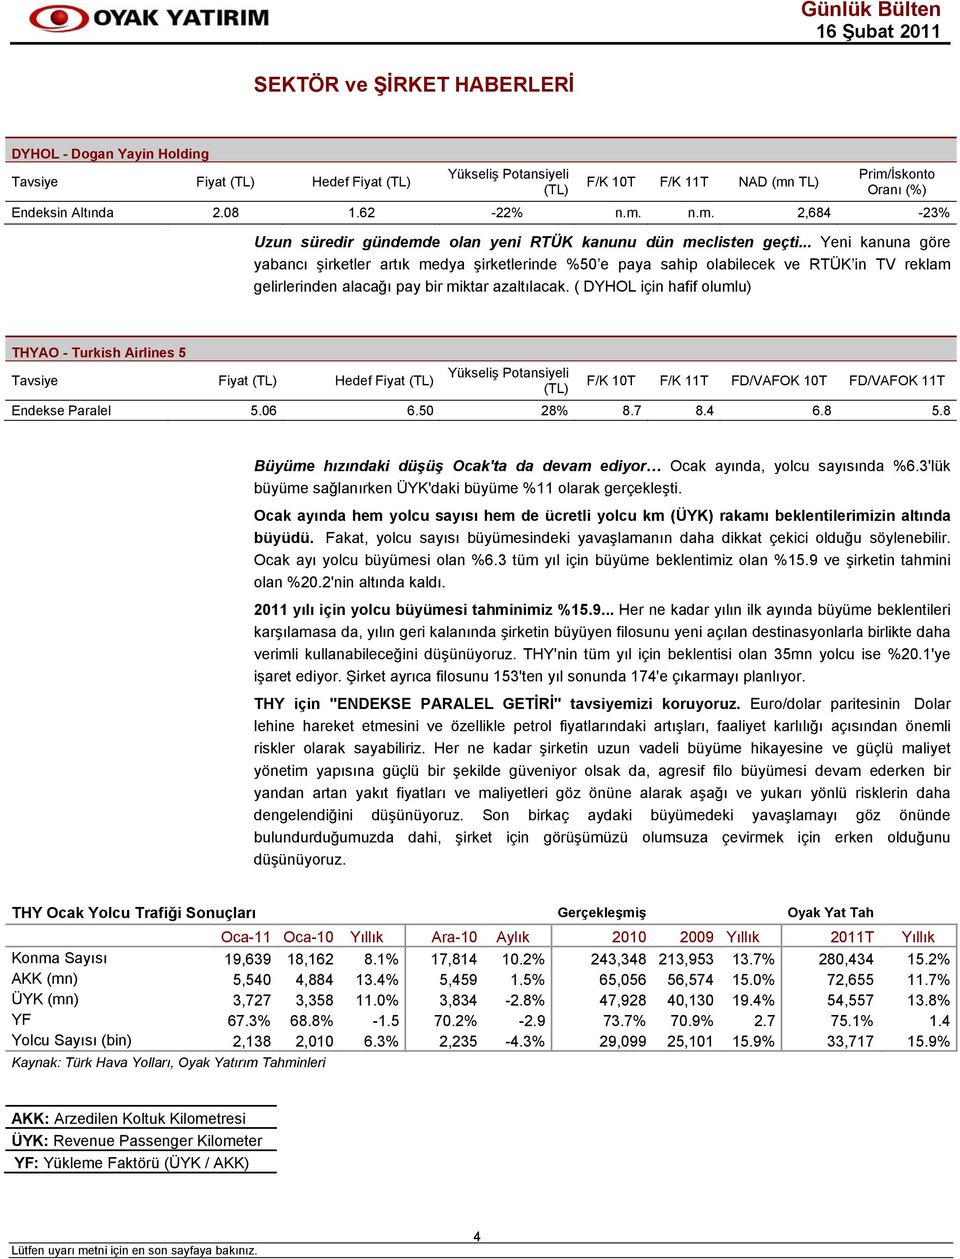 ( DYHOL için hafif olumlu) THYAO - Turkish Airlines 5 Tavsiye Fiyat Hedef Fiyat F/K 10T F/K 11T FD/VAFOK 10T FD/VAFOK 11T Endekse Paralel 5.06 6.50 28% 8.7 8.4 6.8 5.